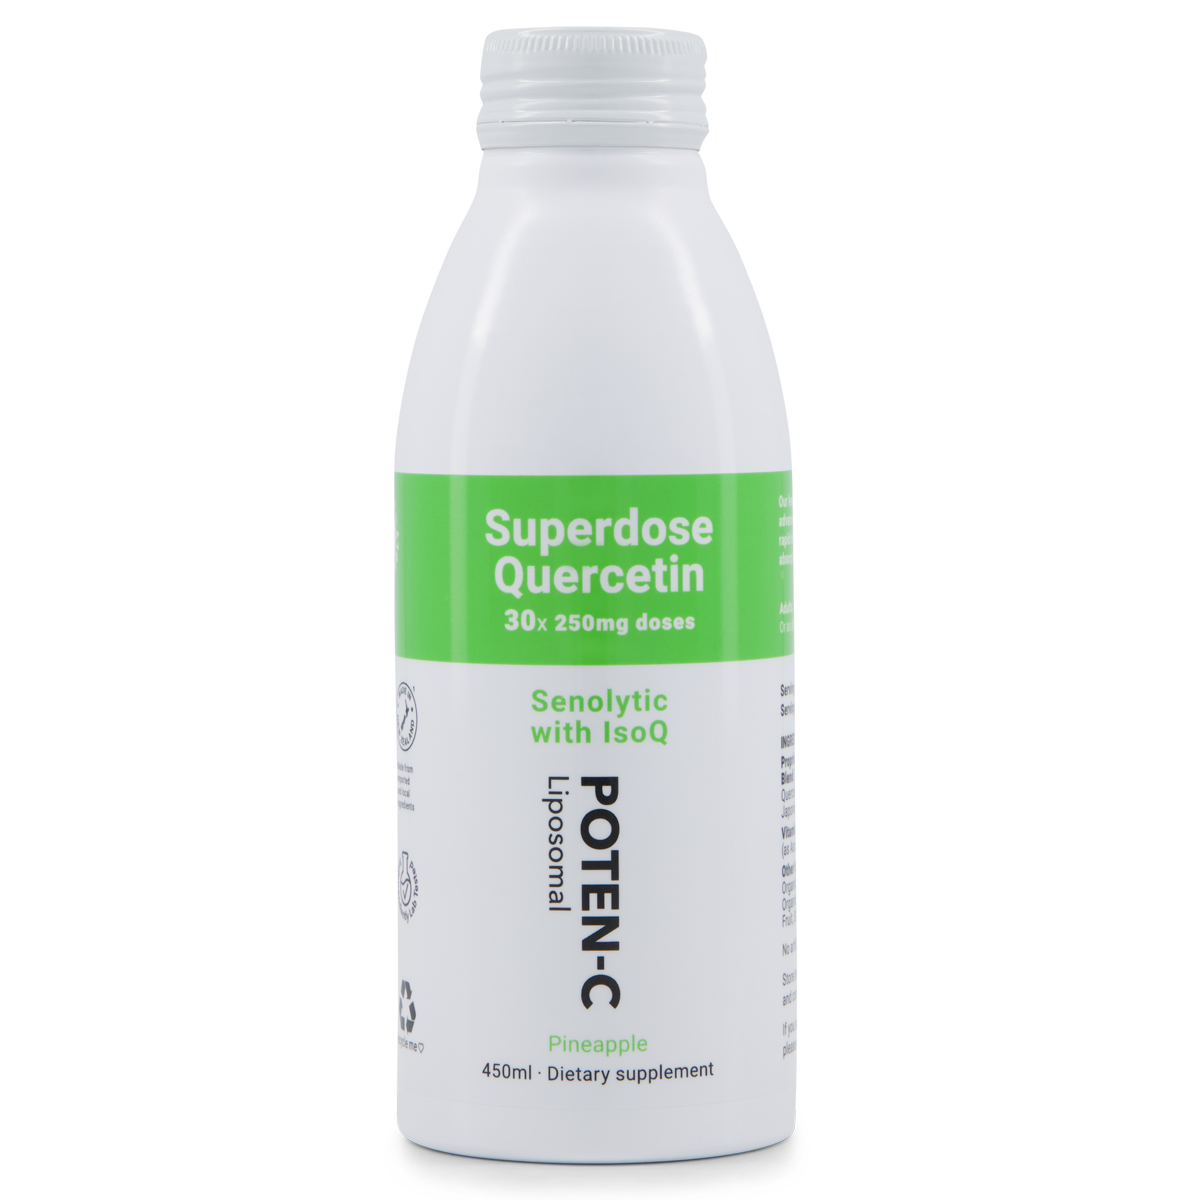 Poten-C Superdose Liposomal Quercetin - 30x 250mg Doses 450ml Pineapple - + FREE Gift with Purchase (75ml 1000mg Liposomal Vitamin C)